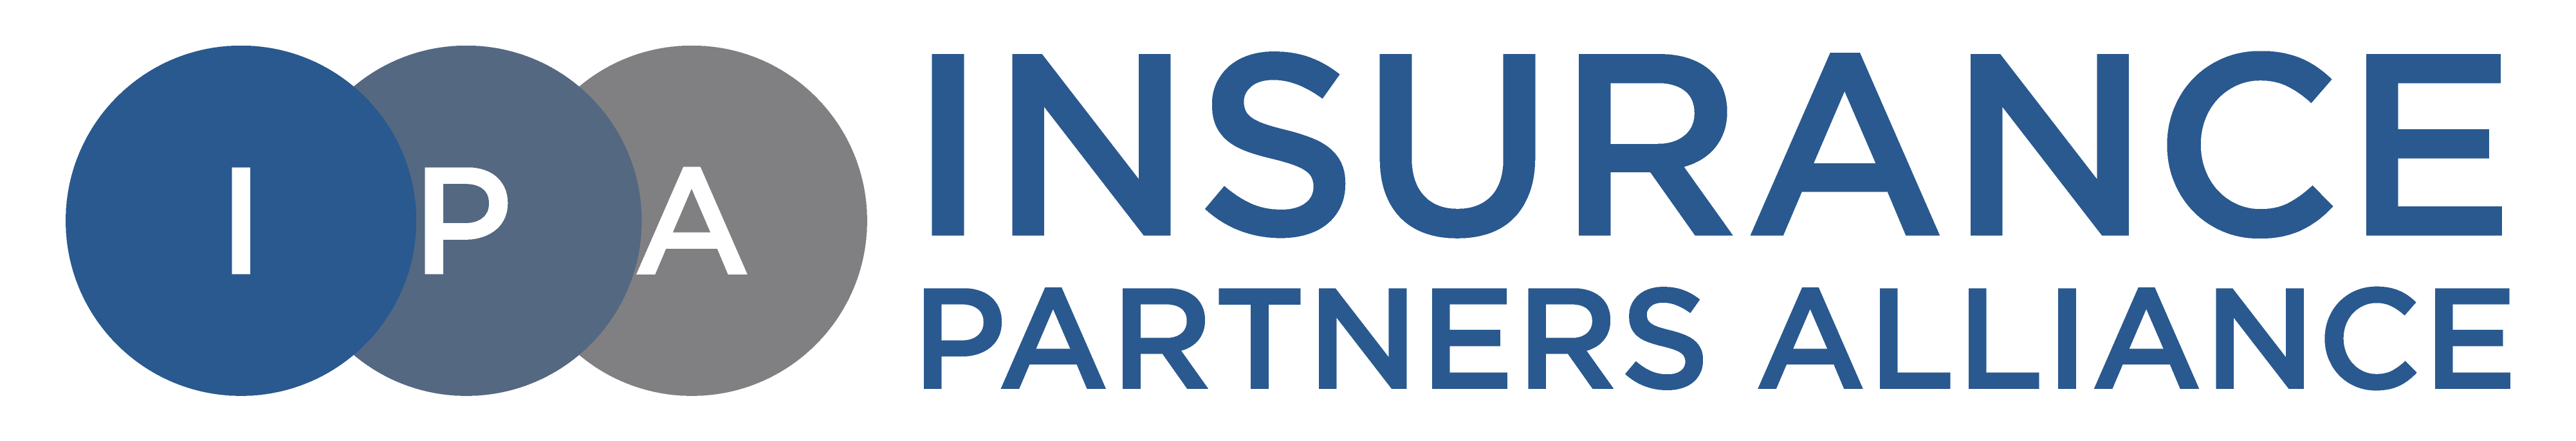 IPA - Insurance Partners Alliance